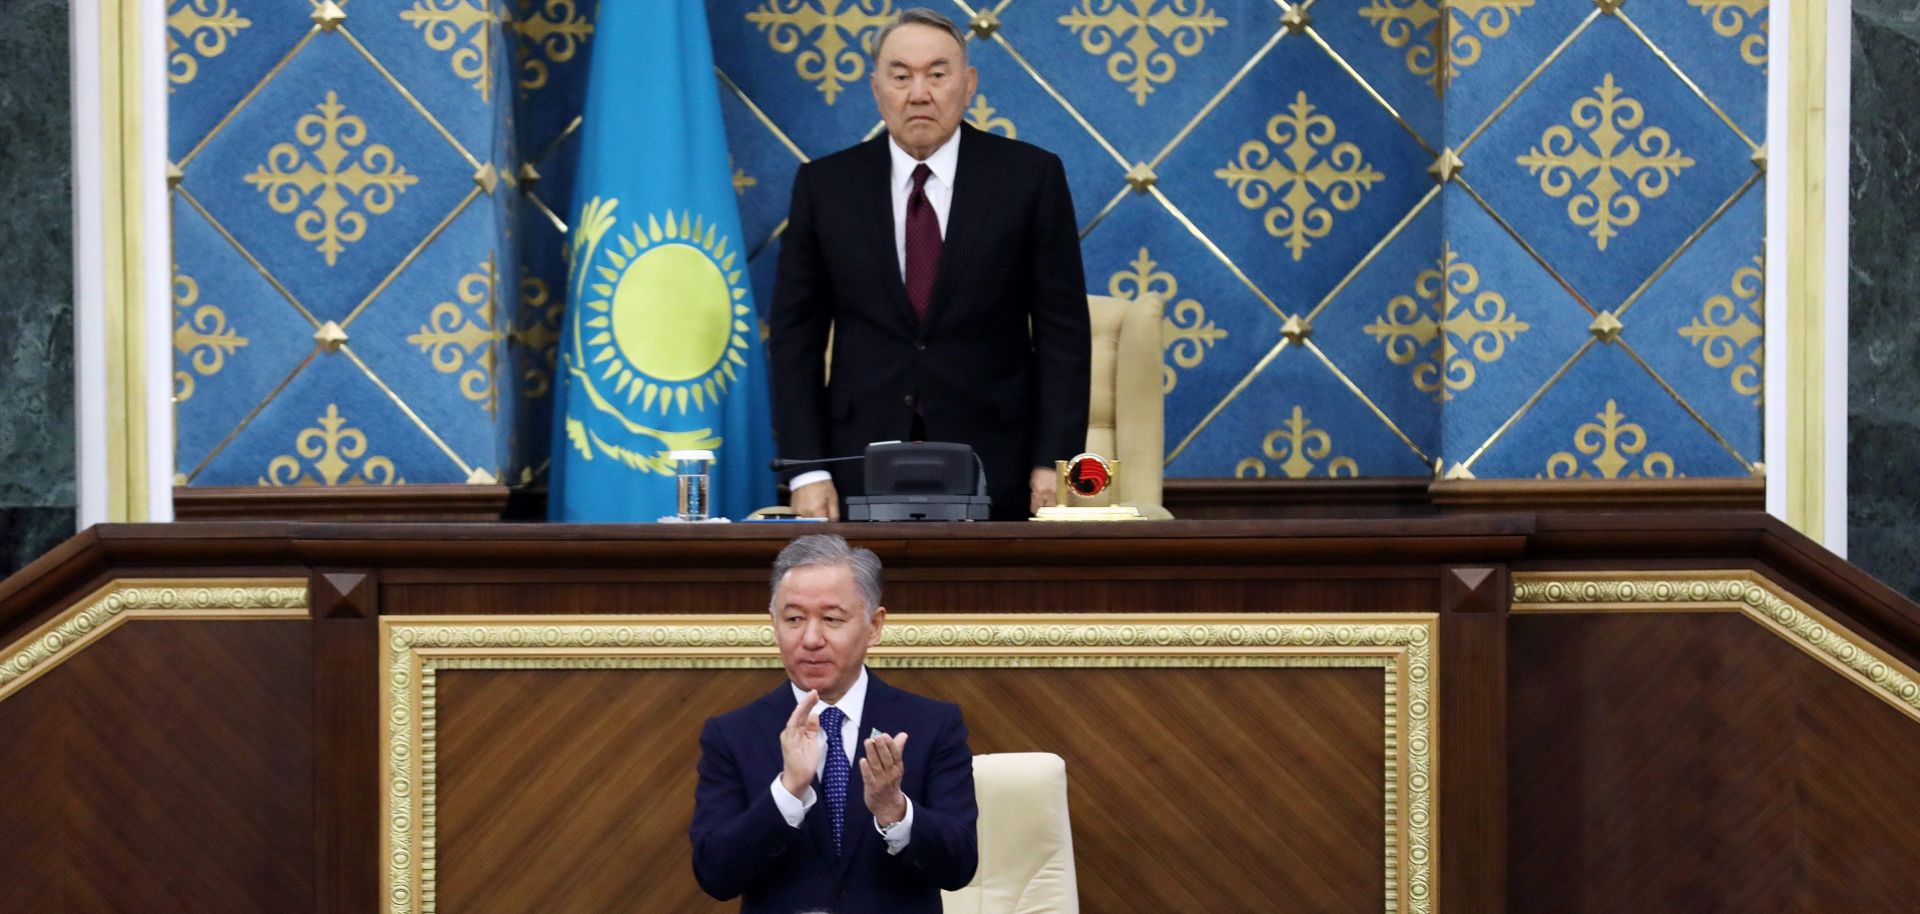 Former Kazakh President Nursultan Nazarbayev, top, and Kazakhstan's interim president Kassym-Jomart Tokayev, bottom, attend a joint session of Parliament on March 20, 2019.